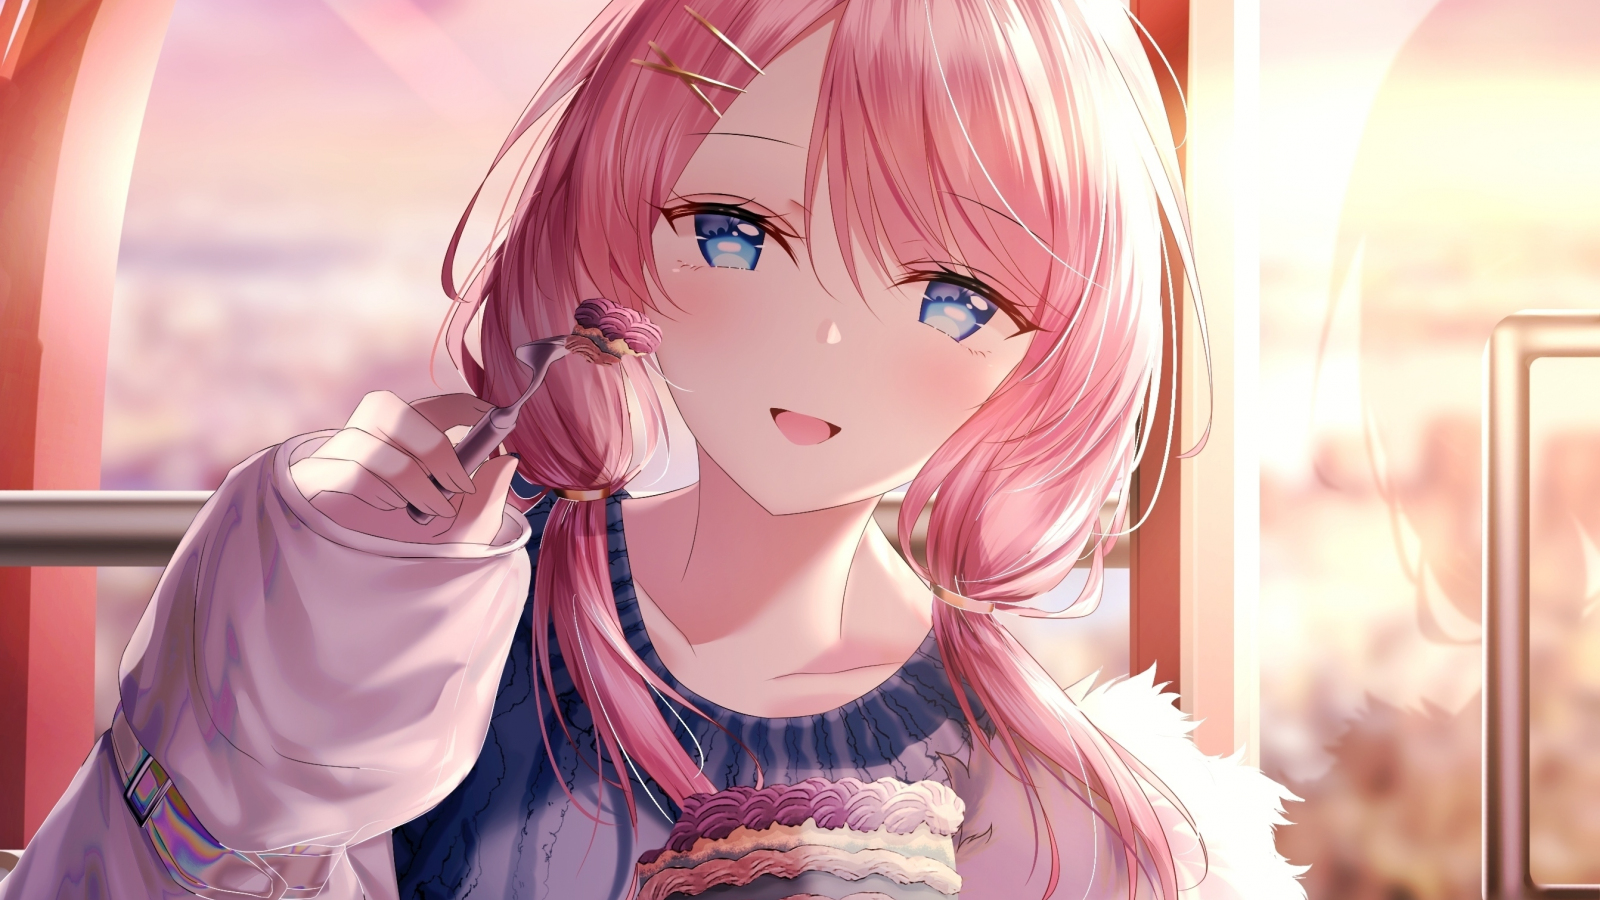 Download wallpaper 1600x900 cute, anime girl, beautiful, eating cake, 16:9  widescreen 1600x900 hd background, 23915